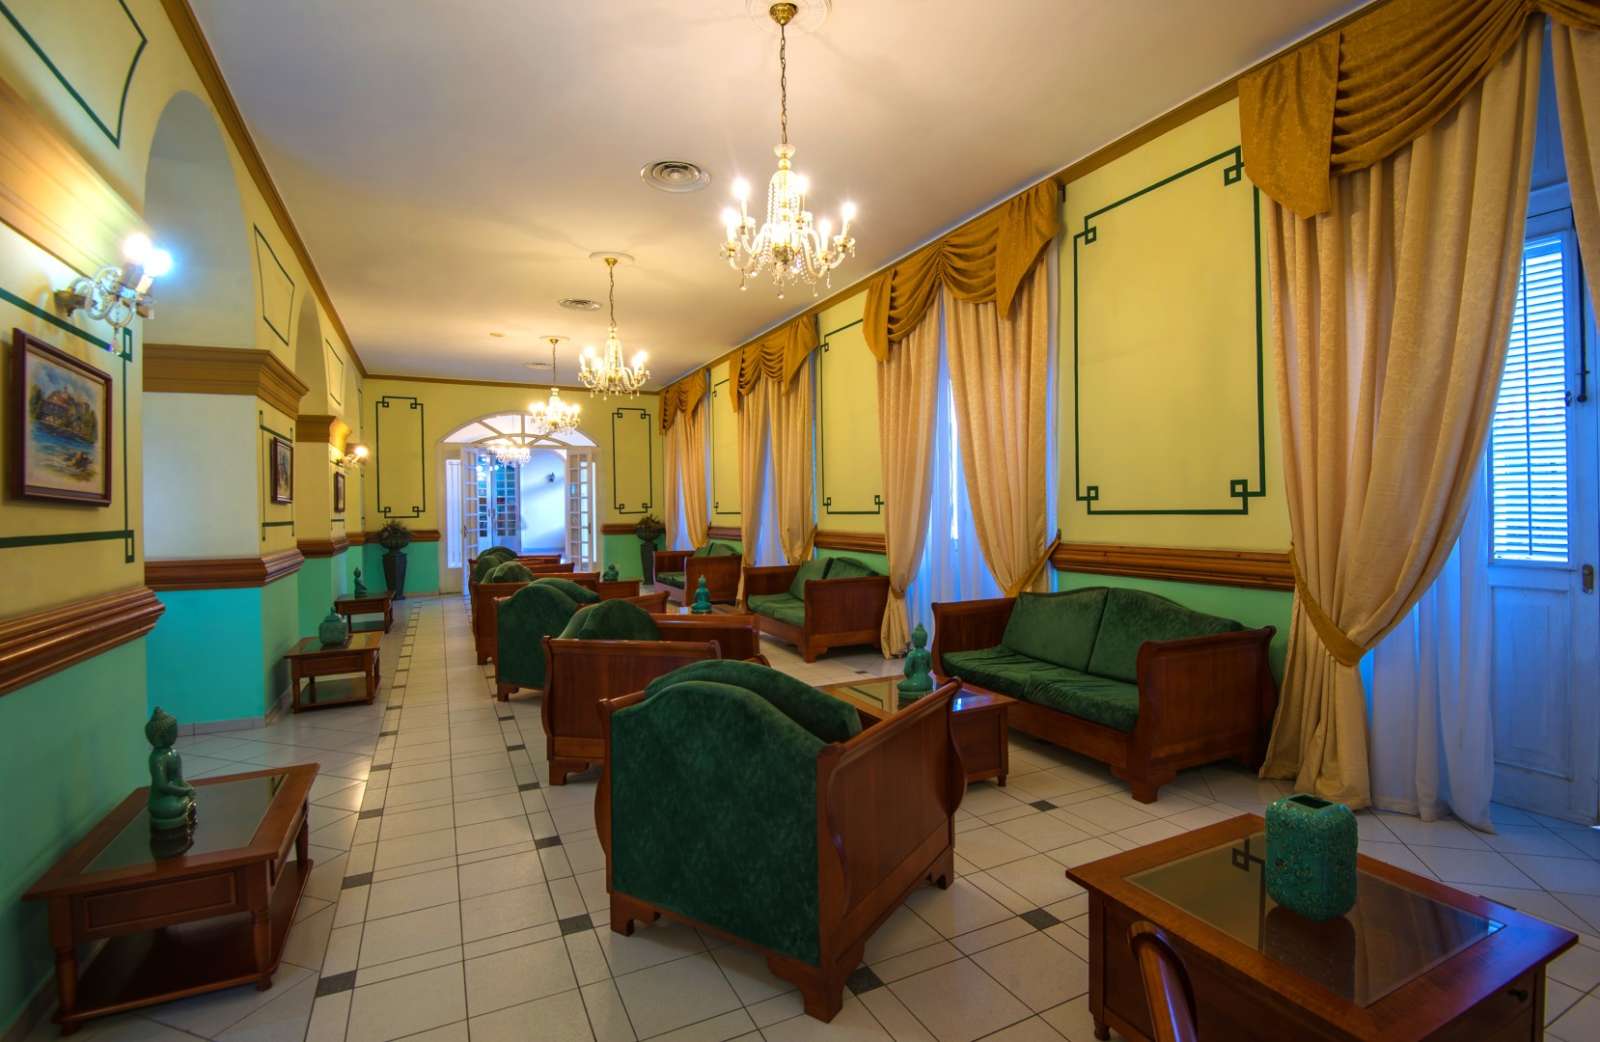 Lobby at Melia Union hotel in Cienfuegos